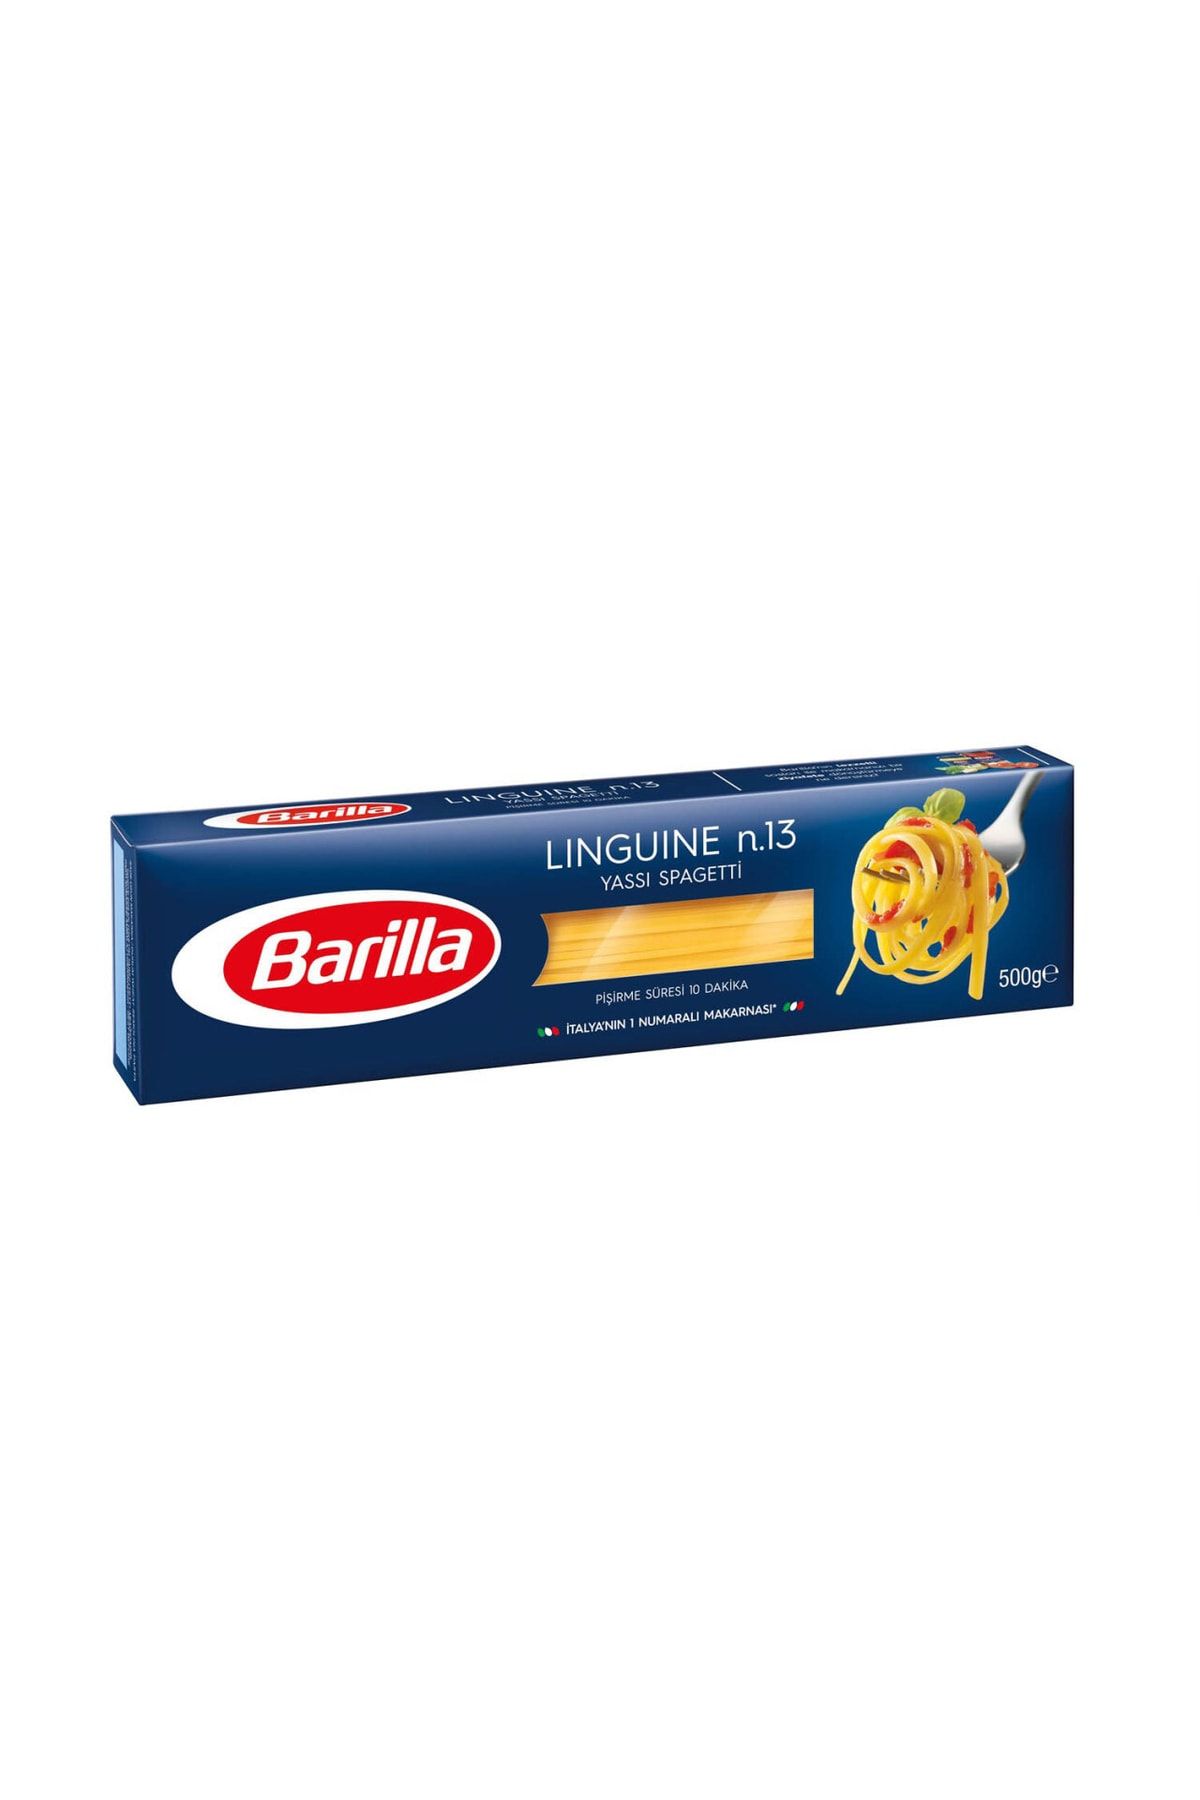 Barilla Linguine (yassı) Spagetti Makarna 500gr*4ad